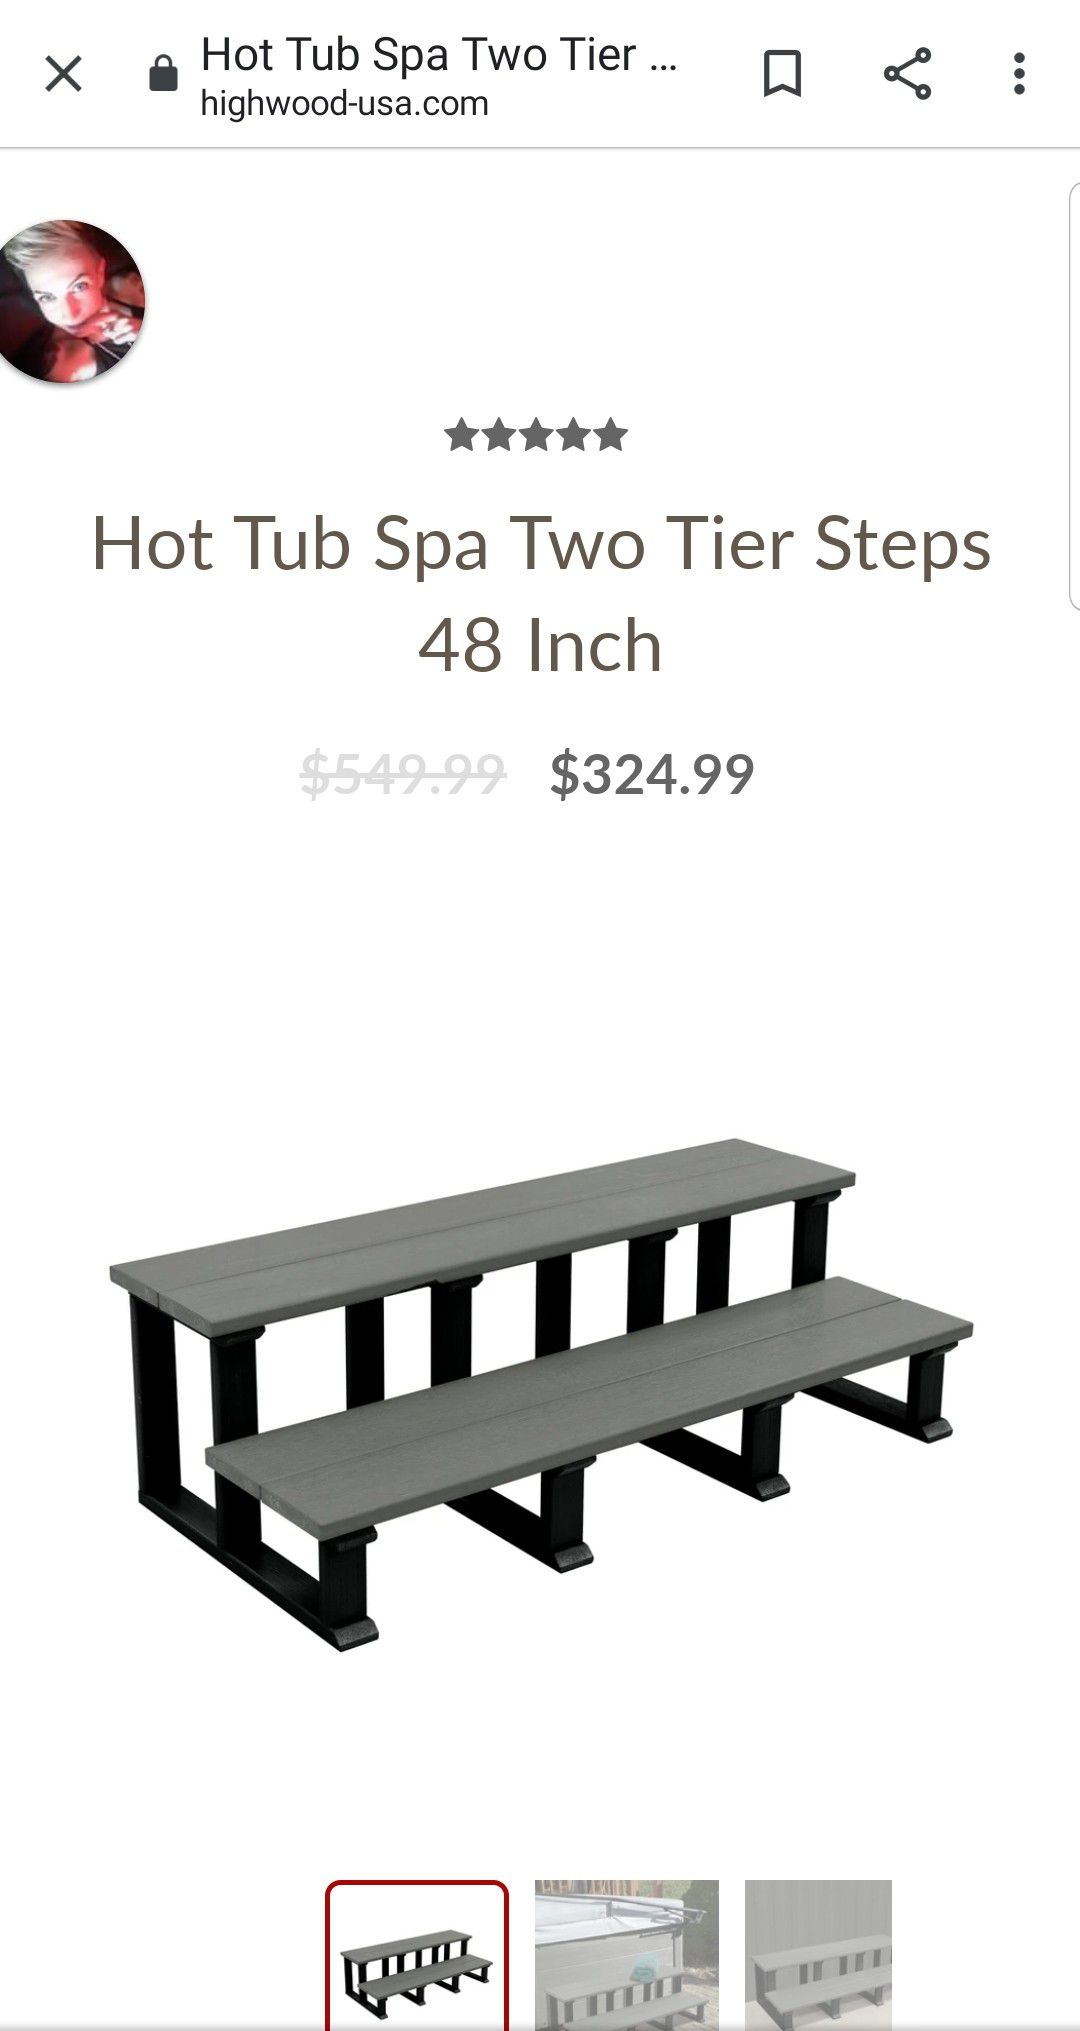 Hot Tub Spa Two Tier Steps, 48", Coastal Teak